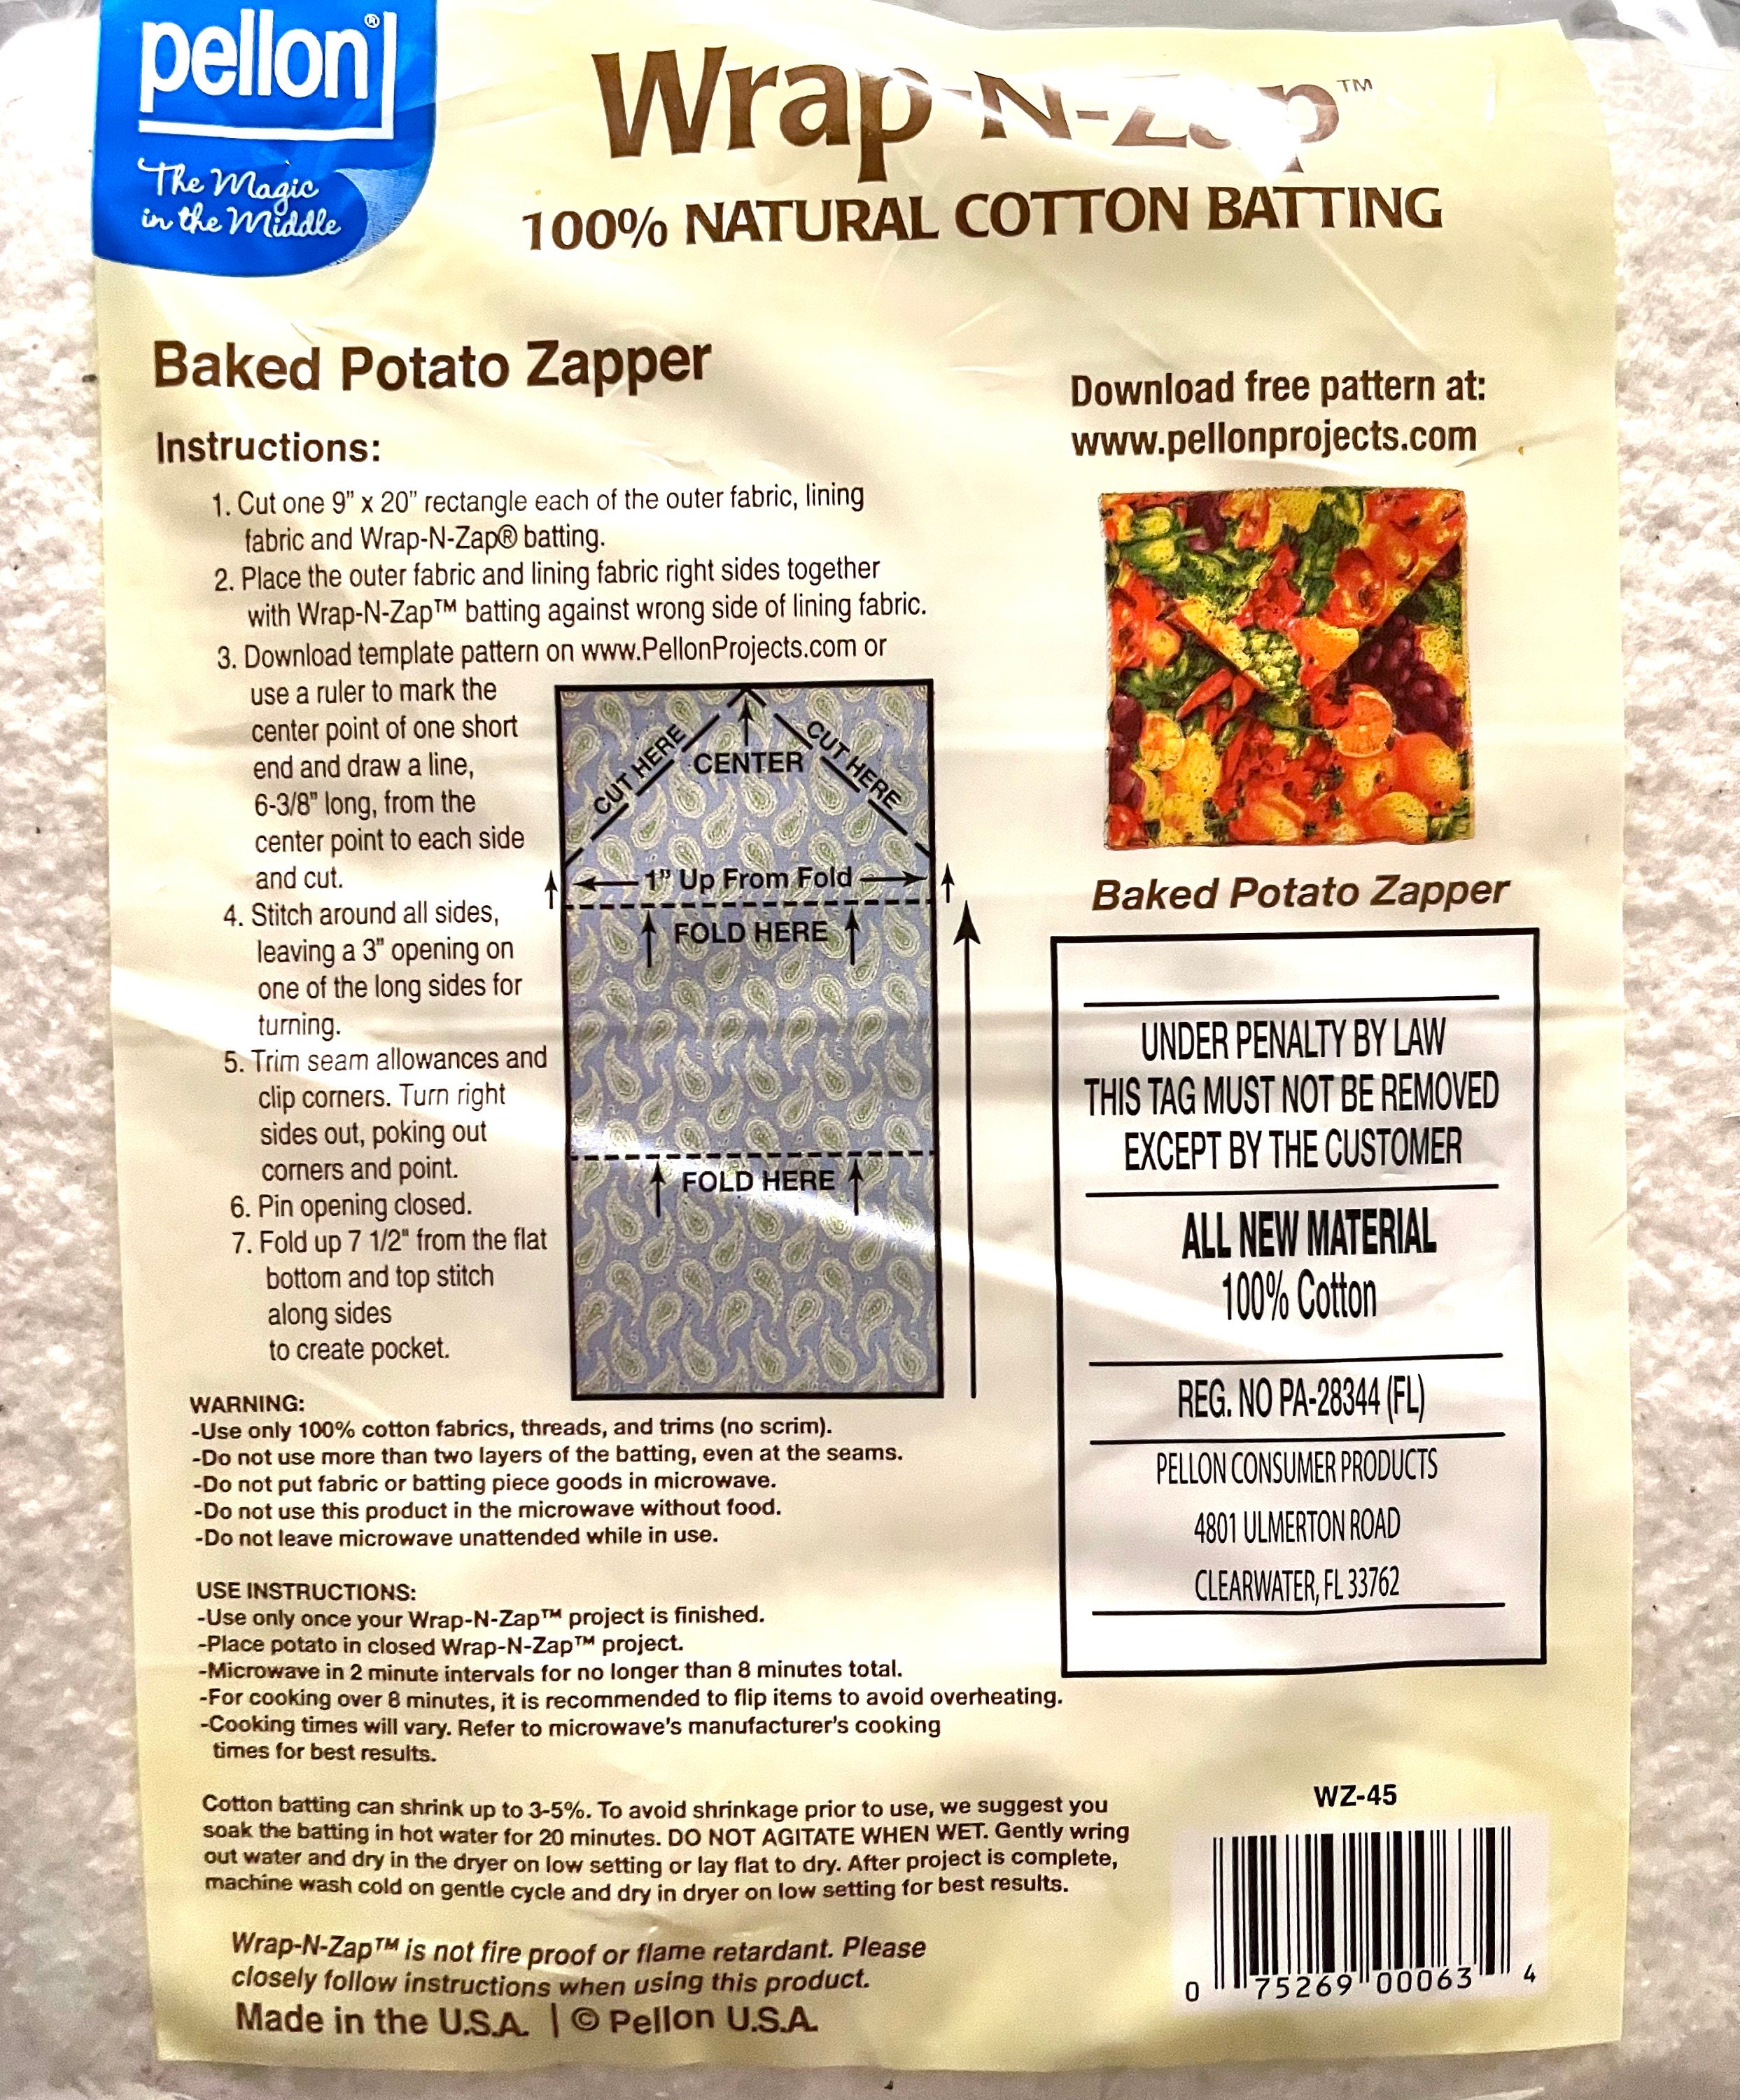 Pellon Wrap-n-zap Microwavable Natural Cotton Batting for Crafts